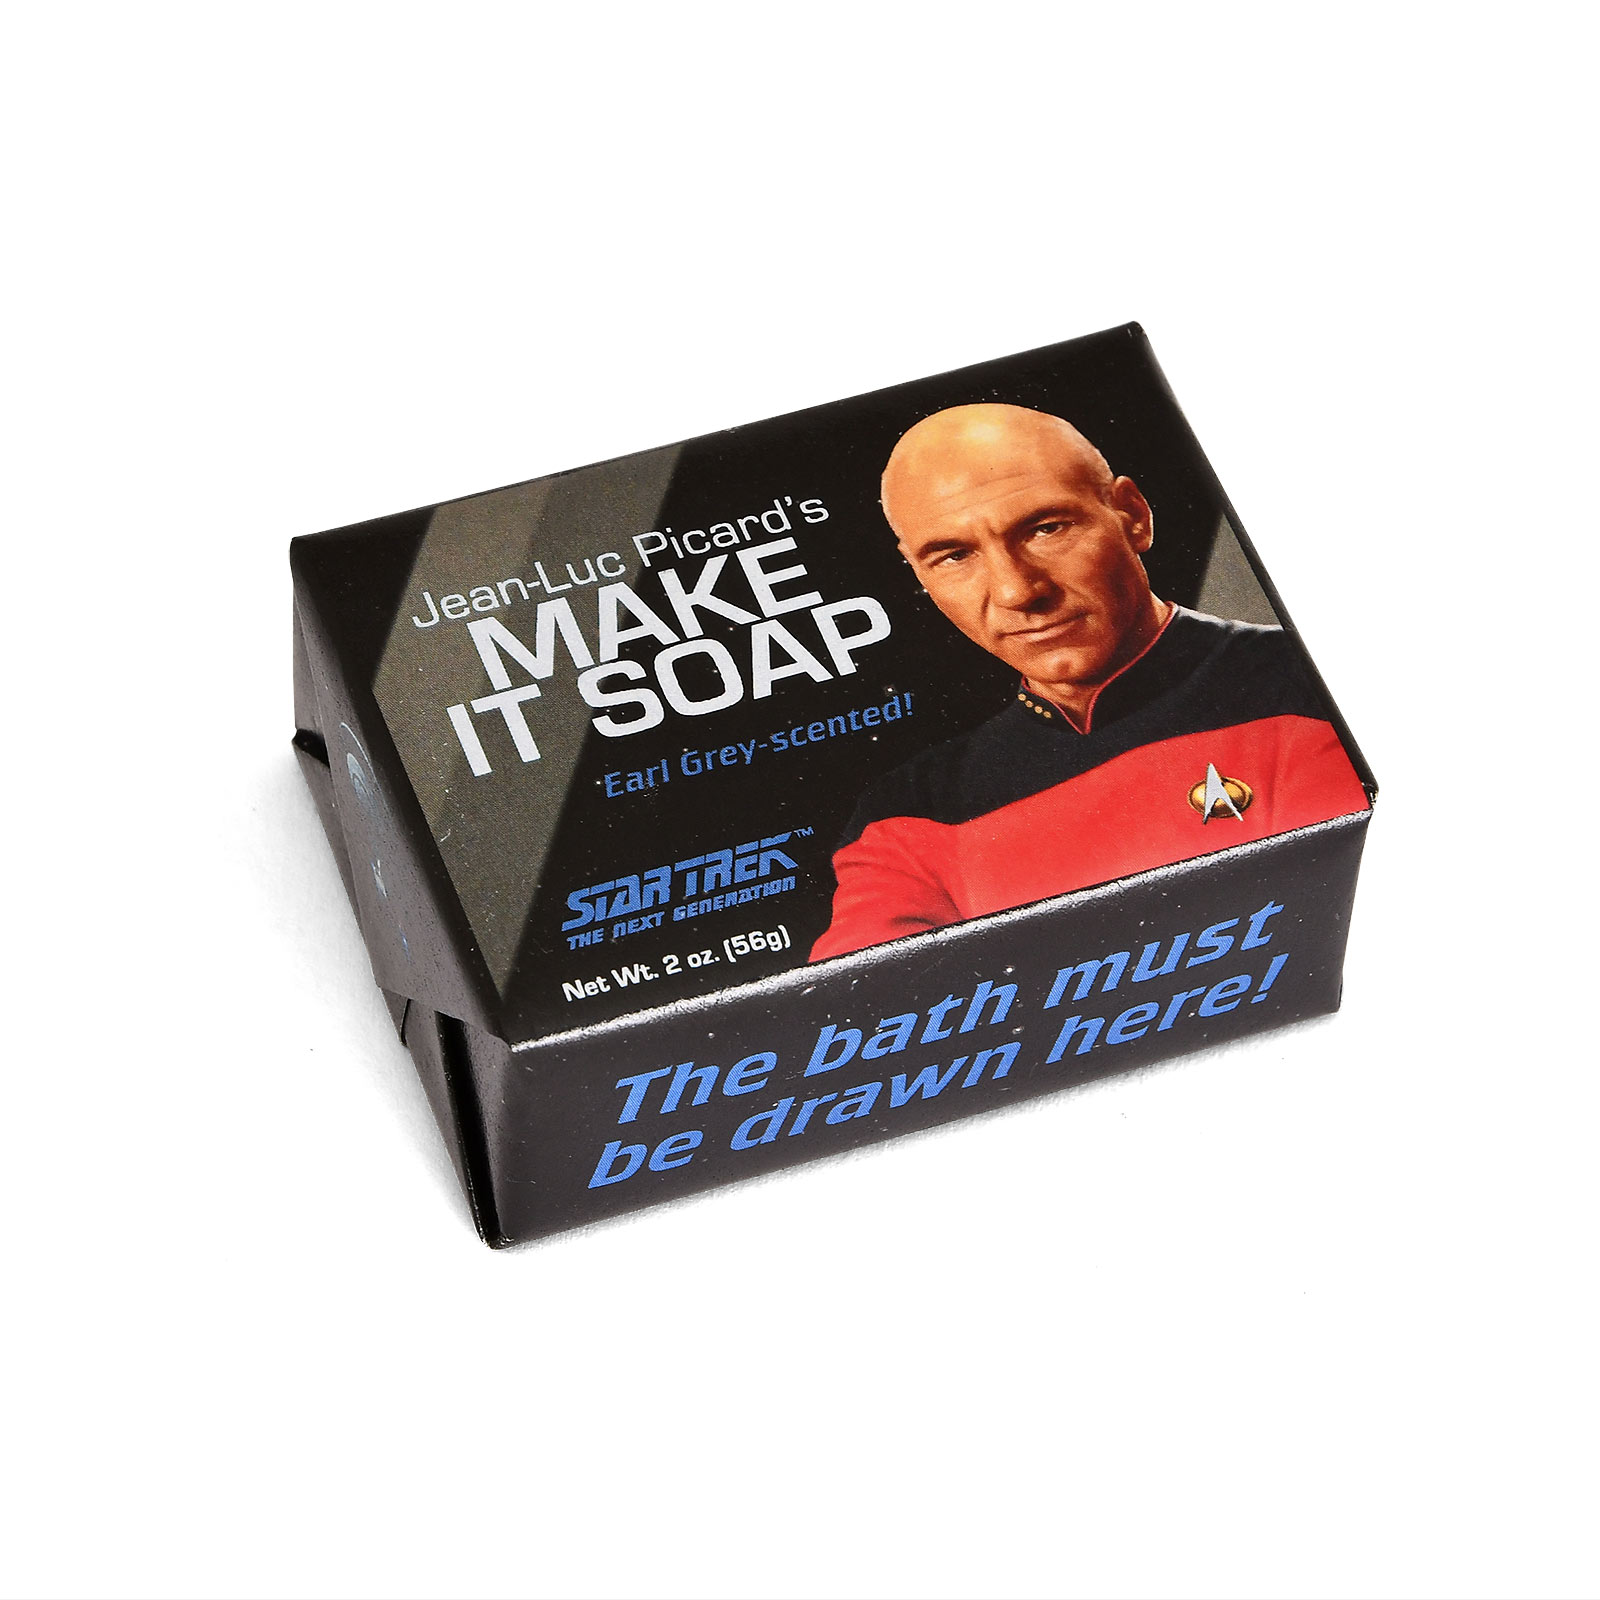 Star Trek - Make it Soap! Soap